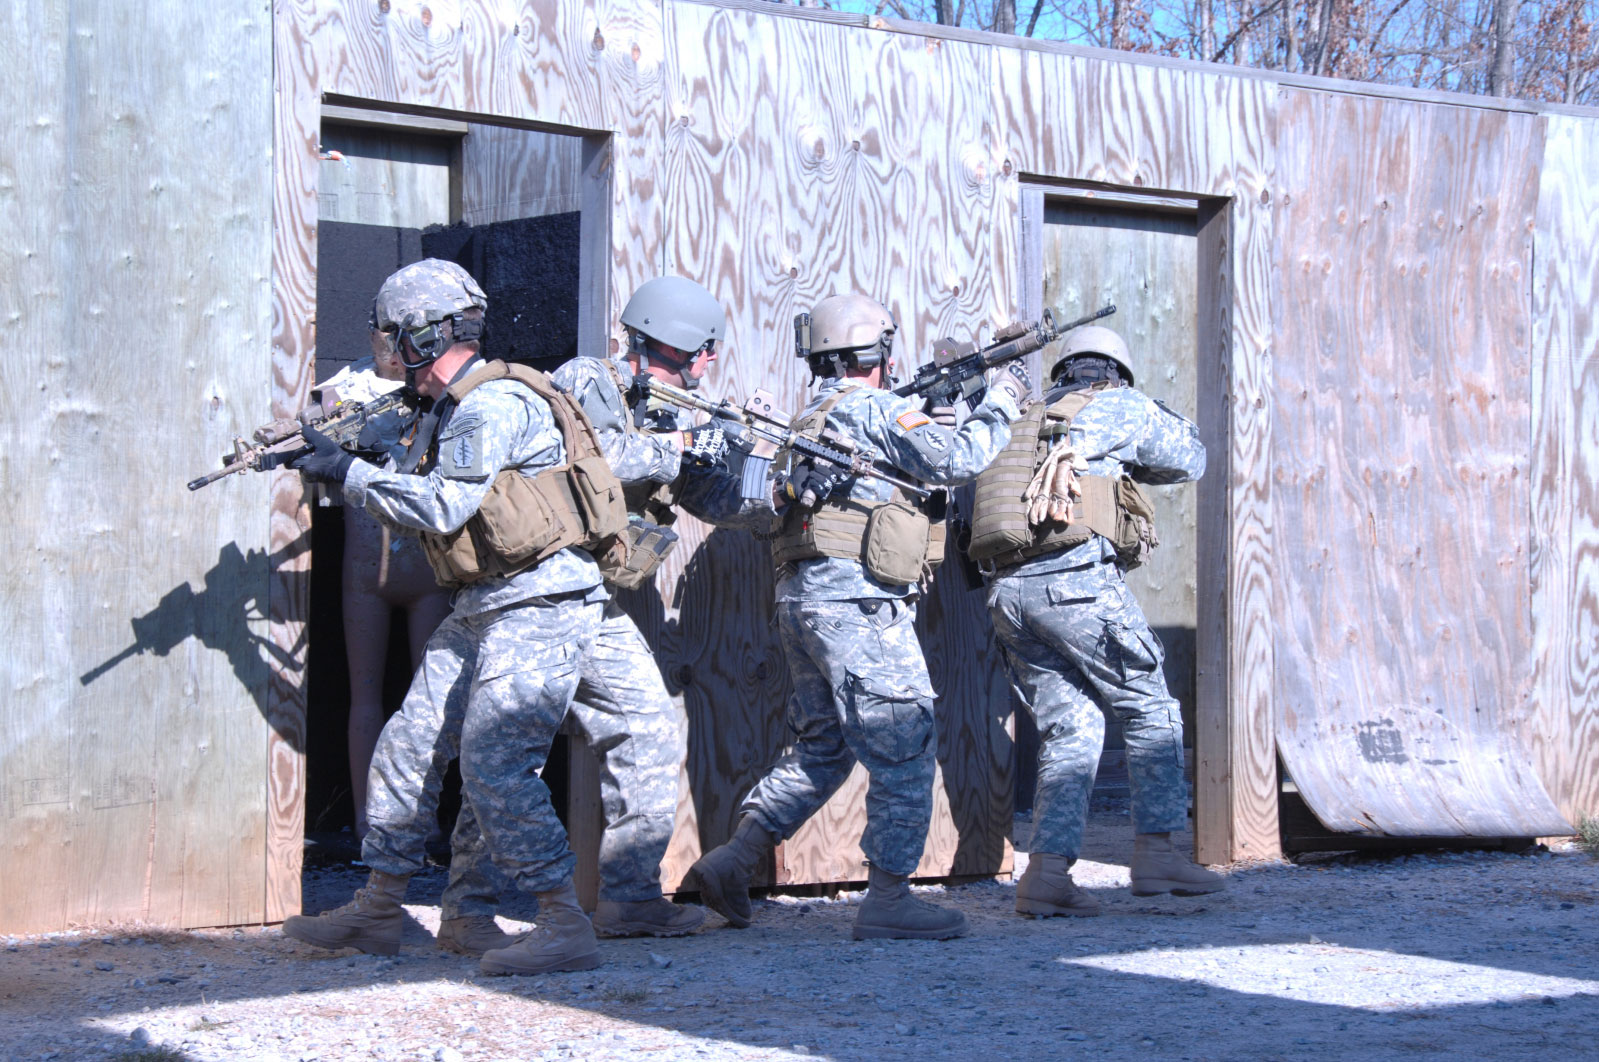 http://www.americanspecialops.com/images/photos/special-forces/special-forces-stack-hires.jpg